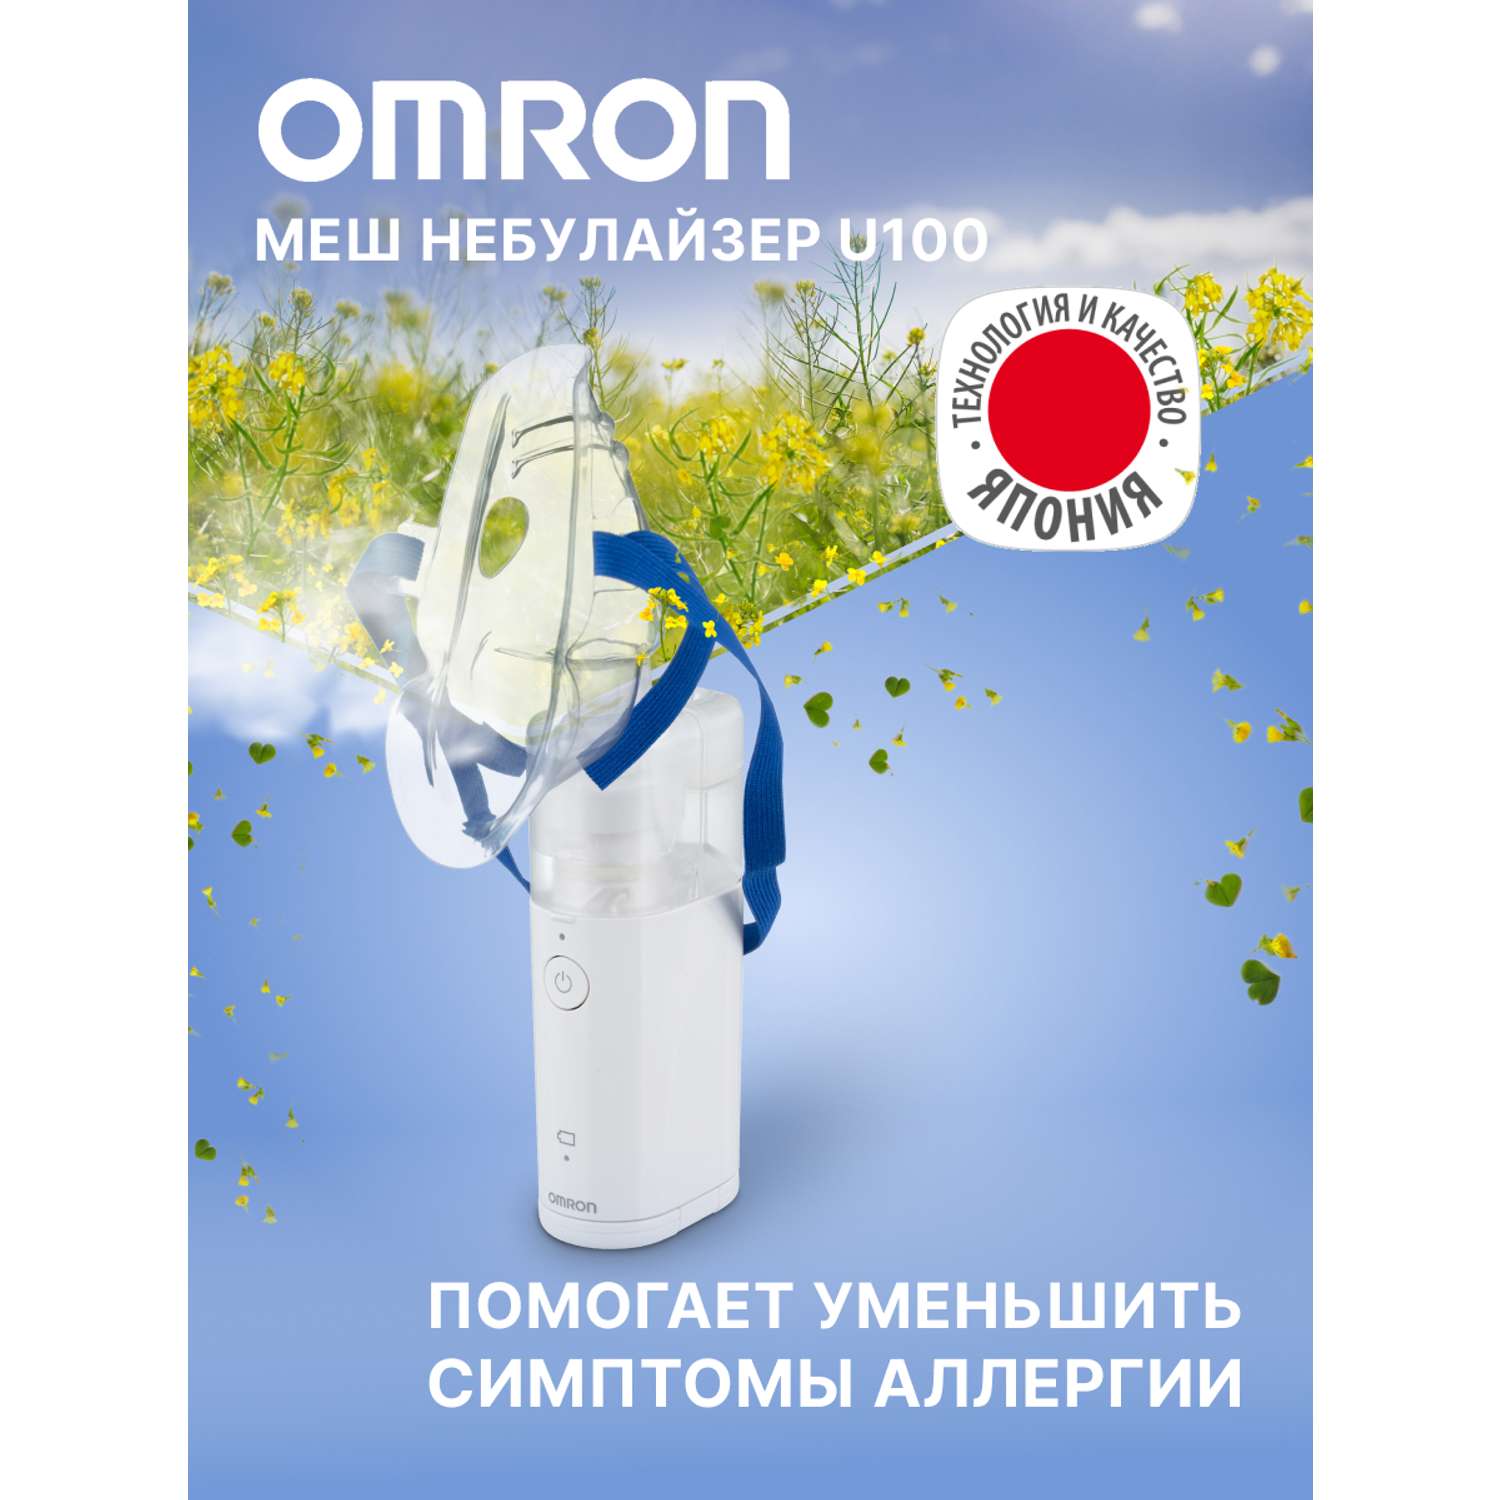 МЭШ небулайзер OMRON MicroAIR U100 - фото 1